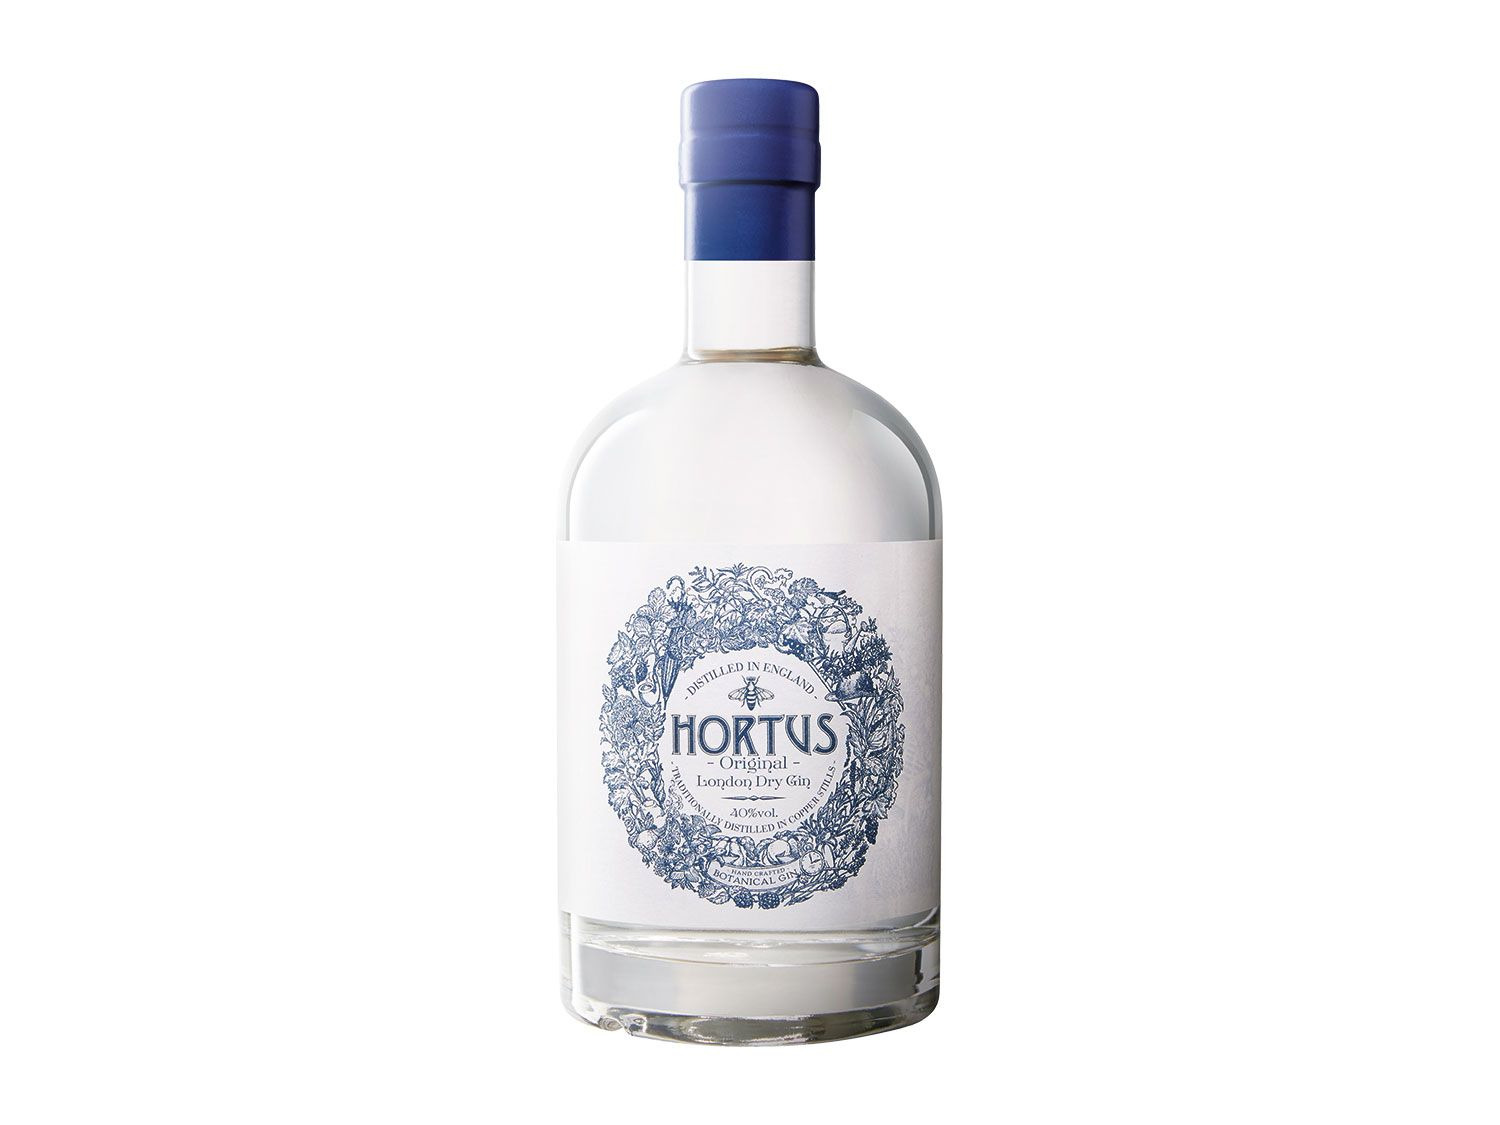 Hortus London Dry Gin 40% Vol online kaufen | LIDL